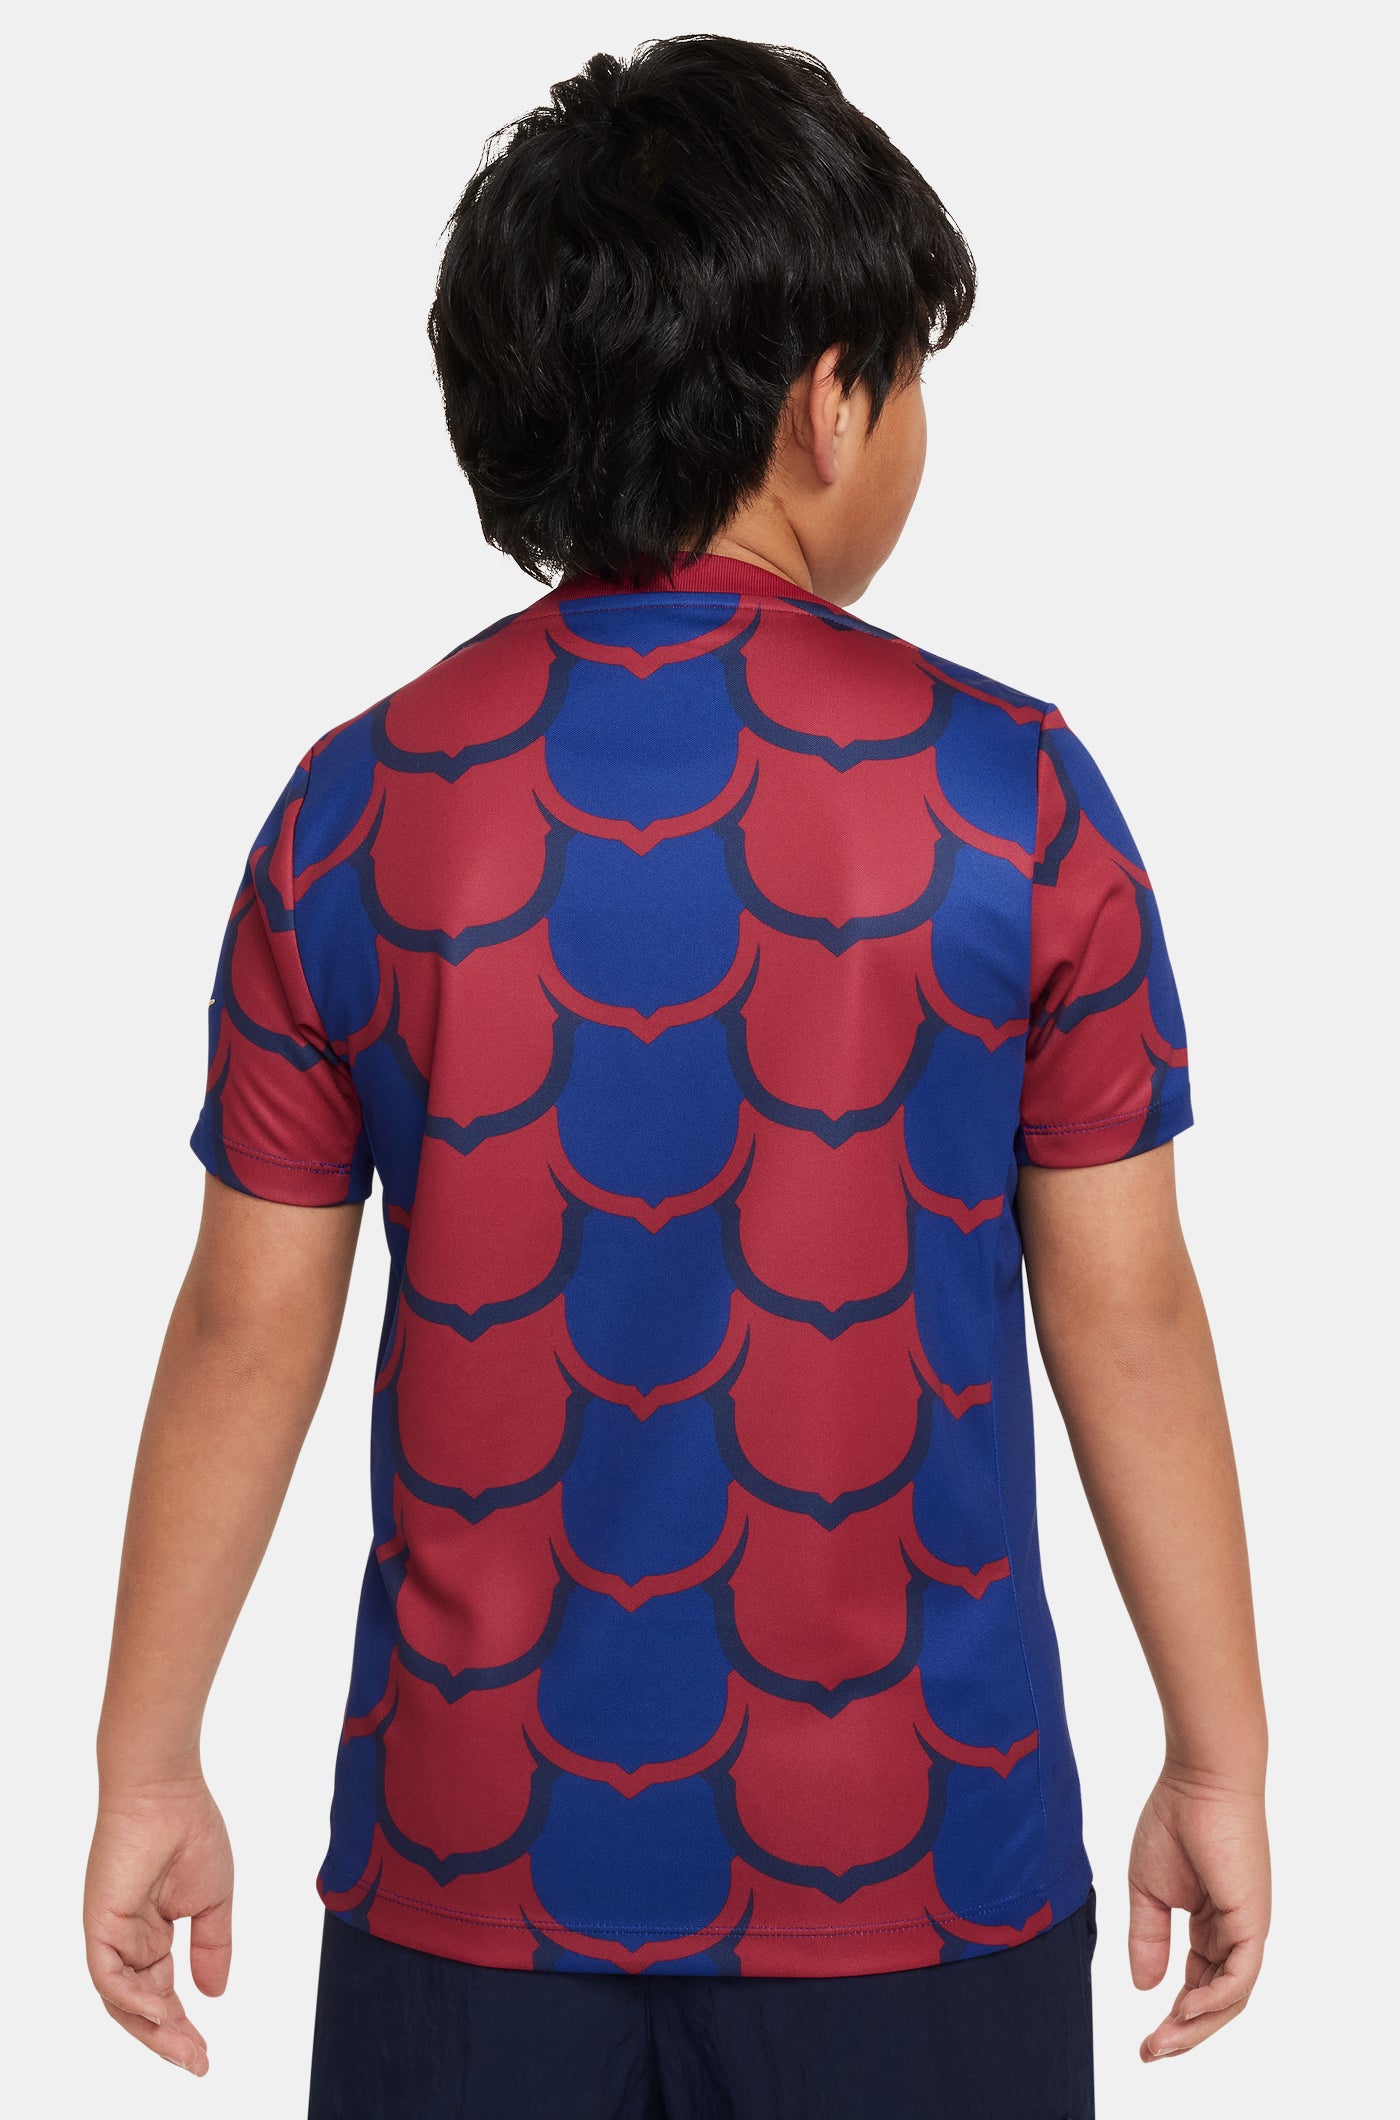 FC Barcelona blaugrana Pre-Match Shirt - Junior